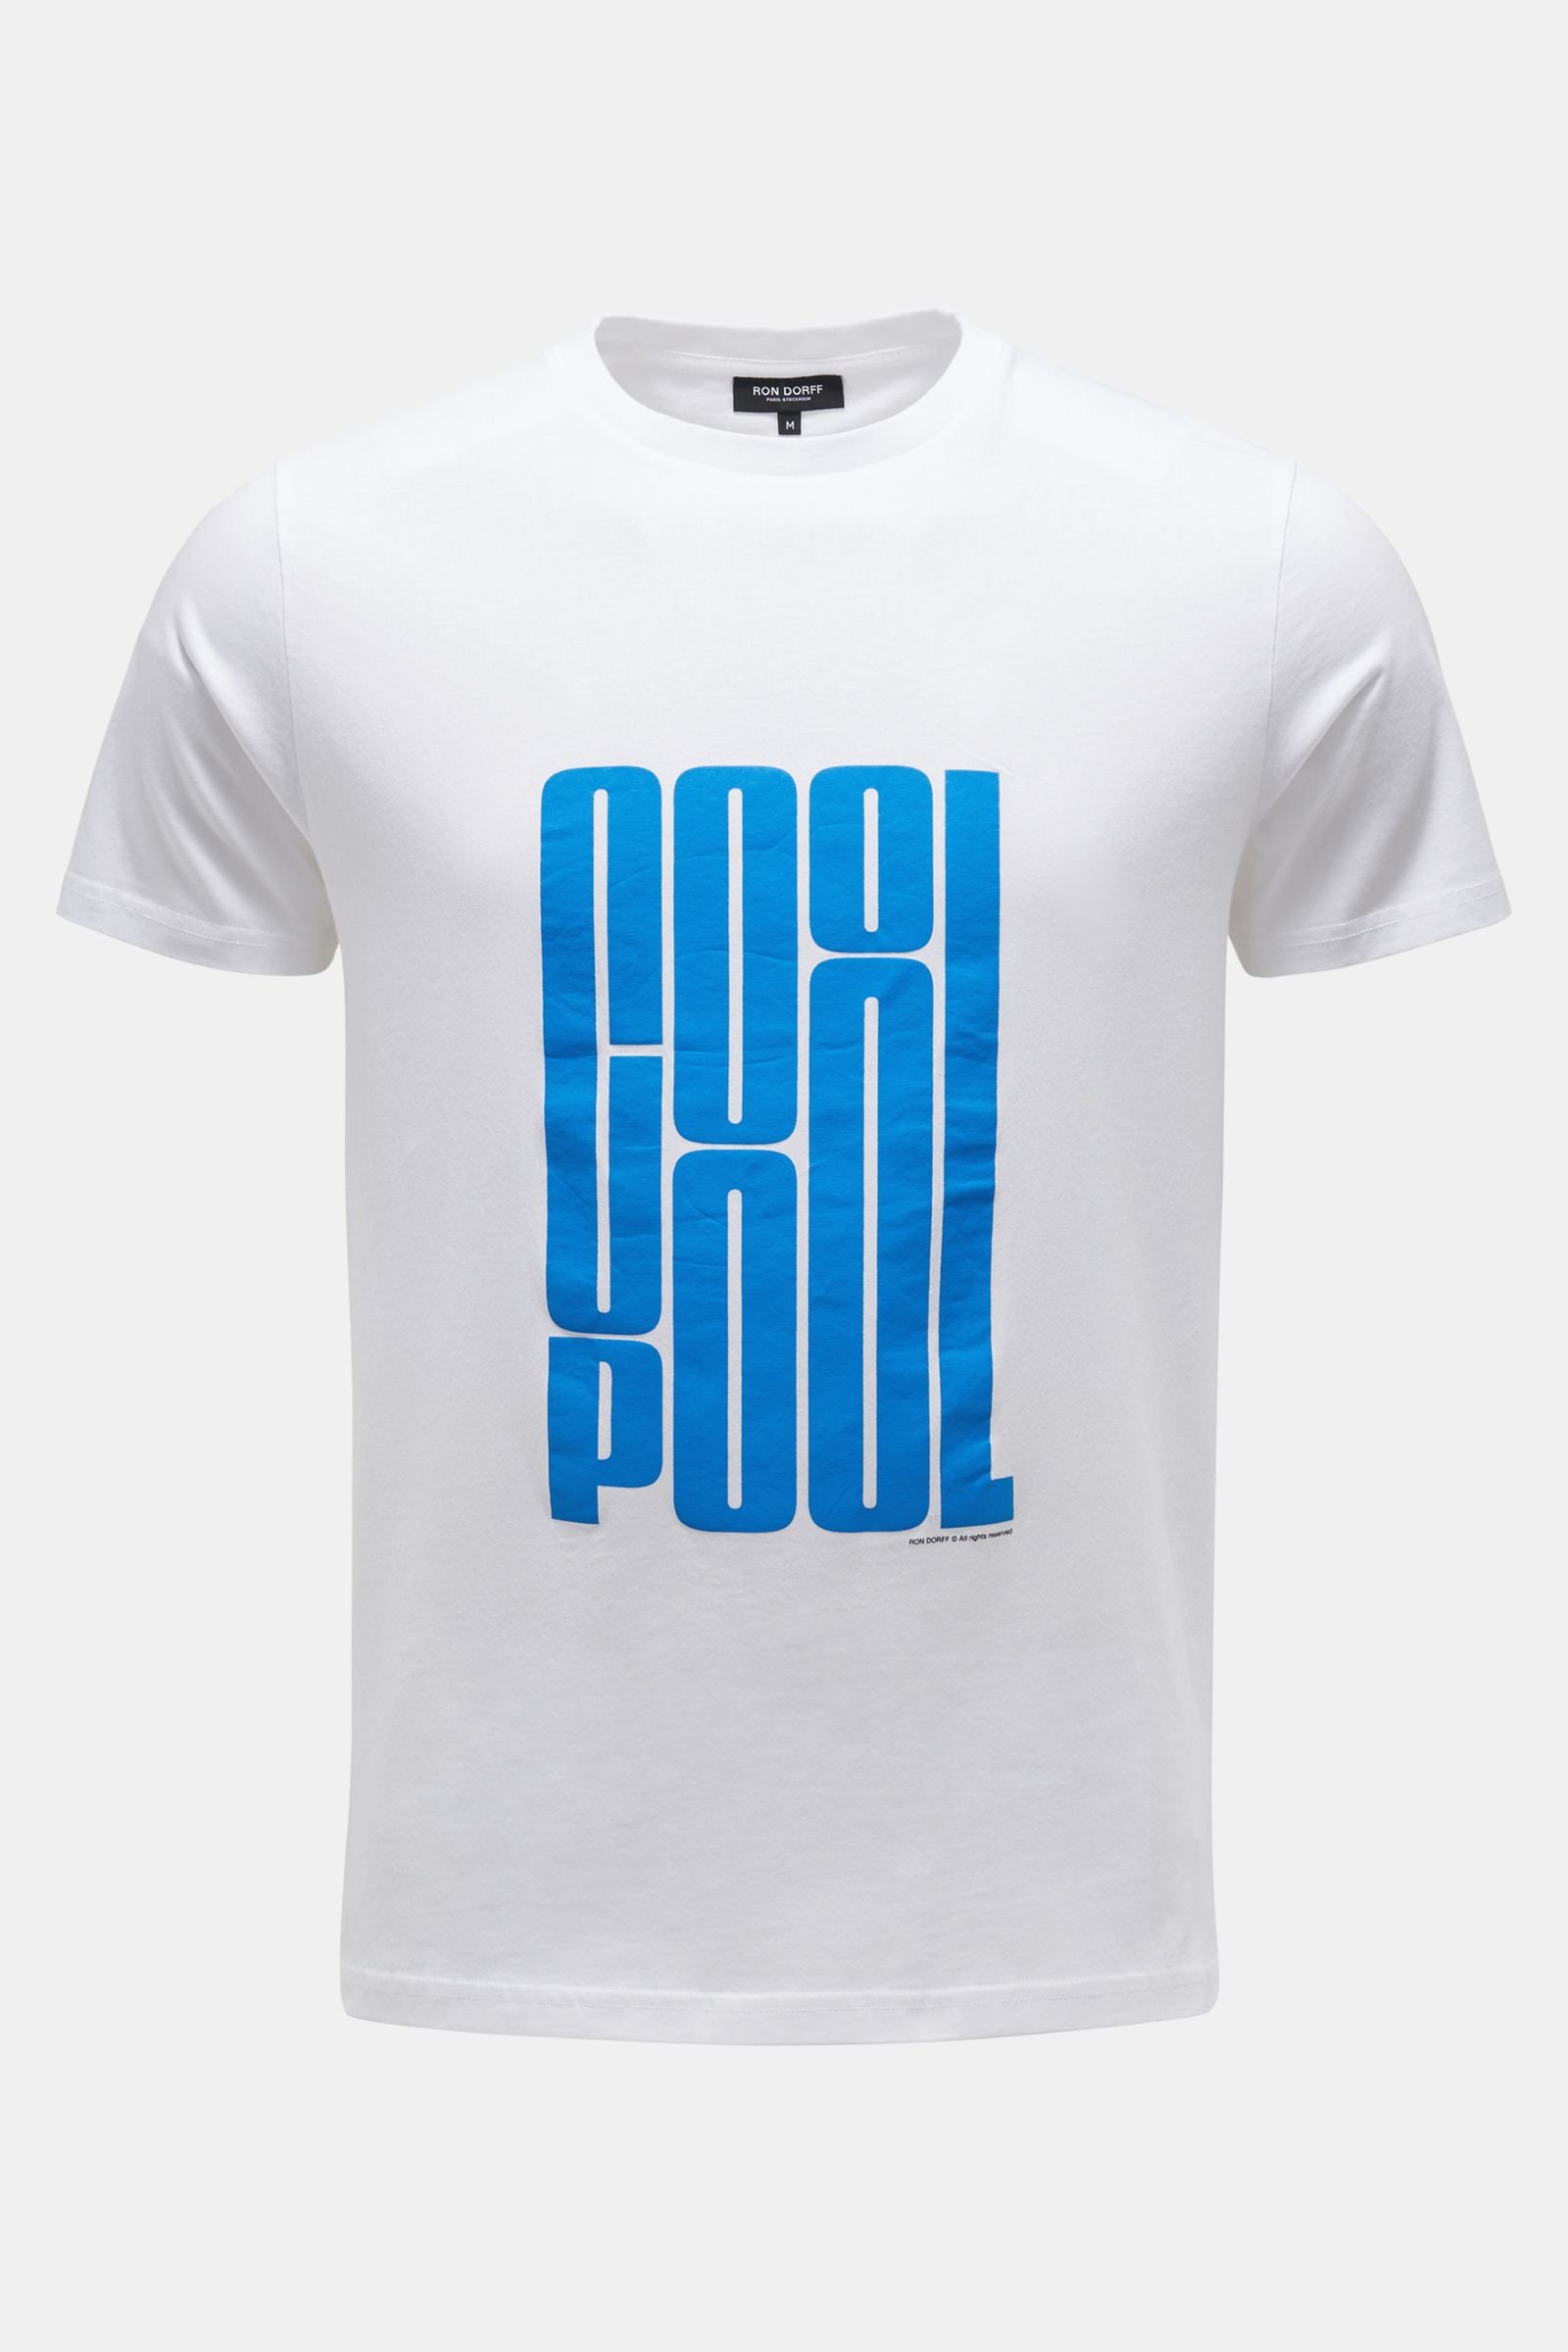 Rundhals-T-Shirt 'Cool Pool' weiß